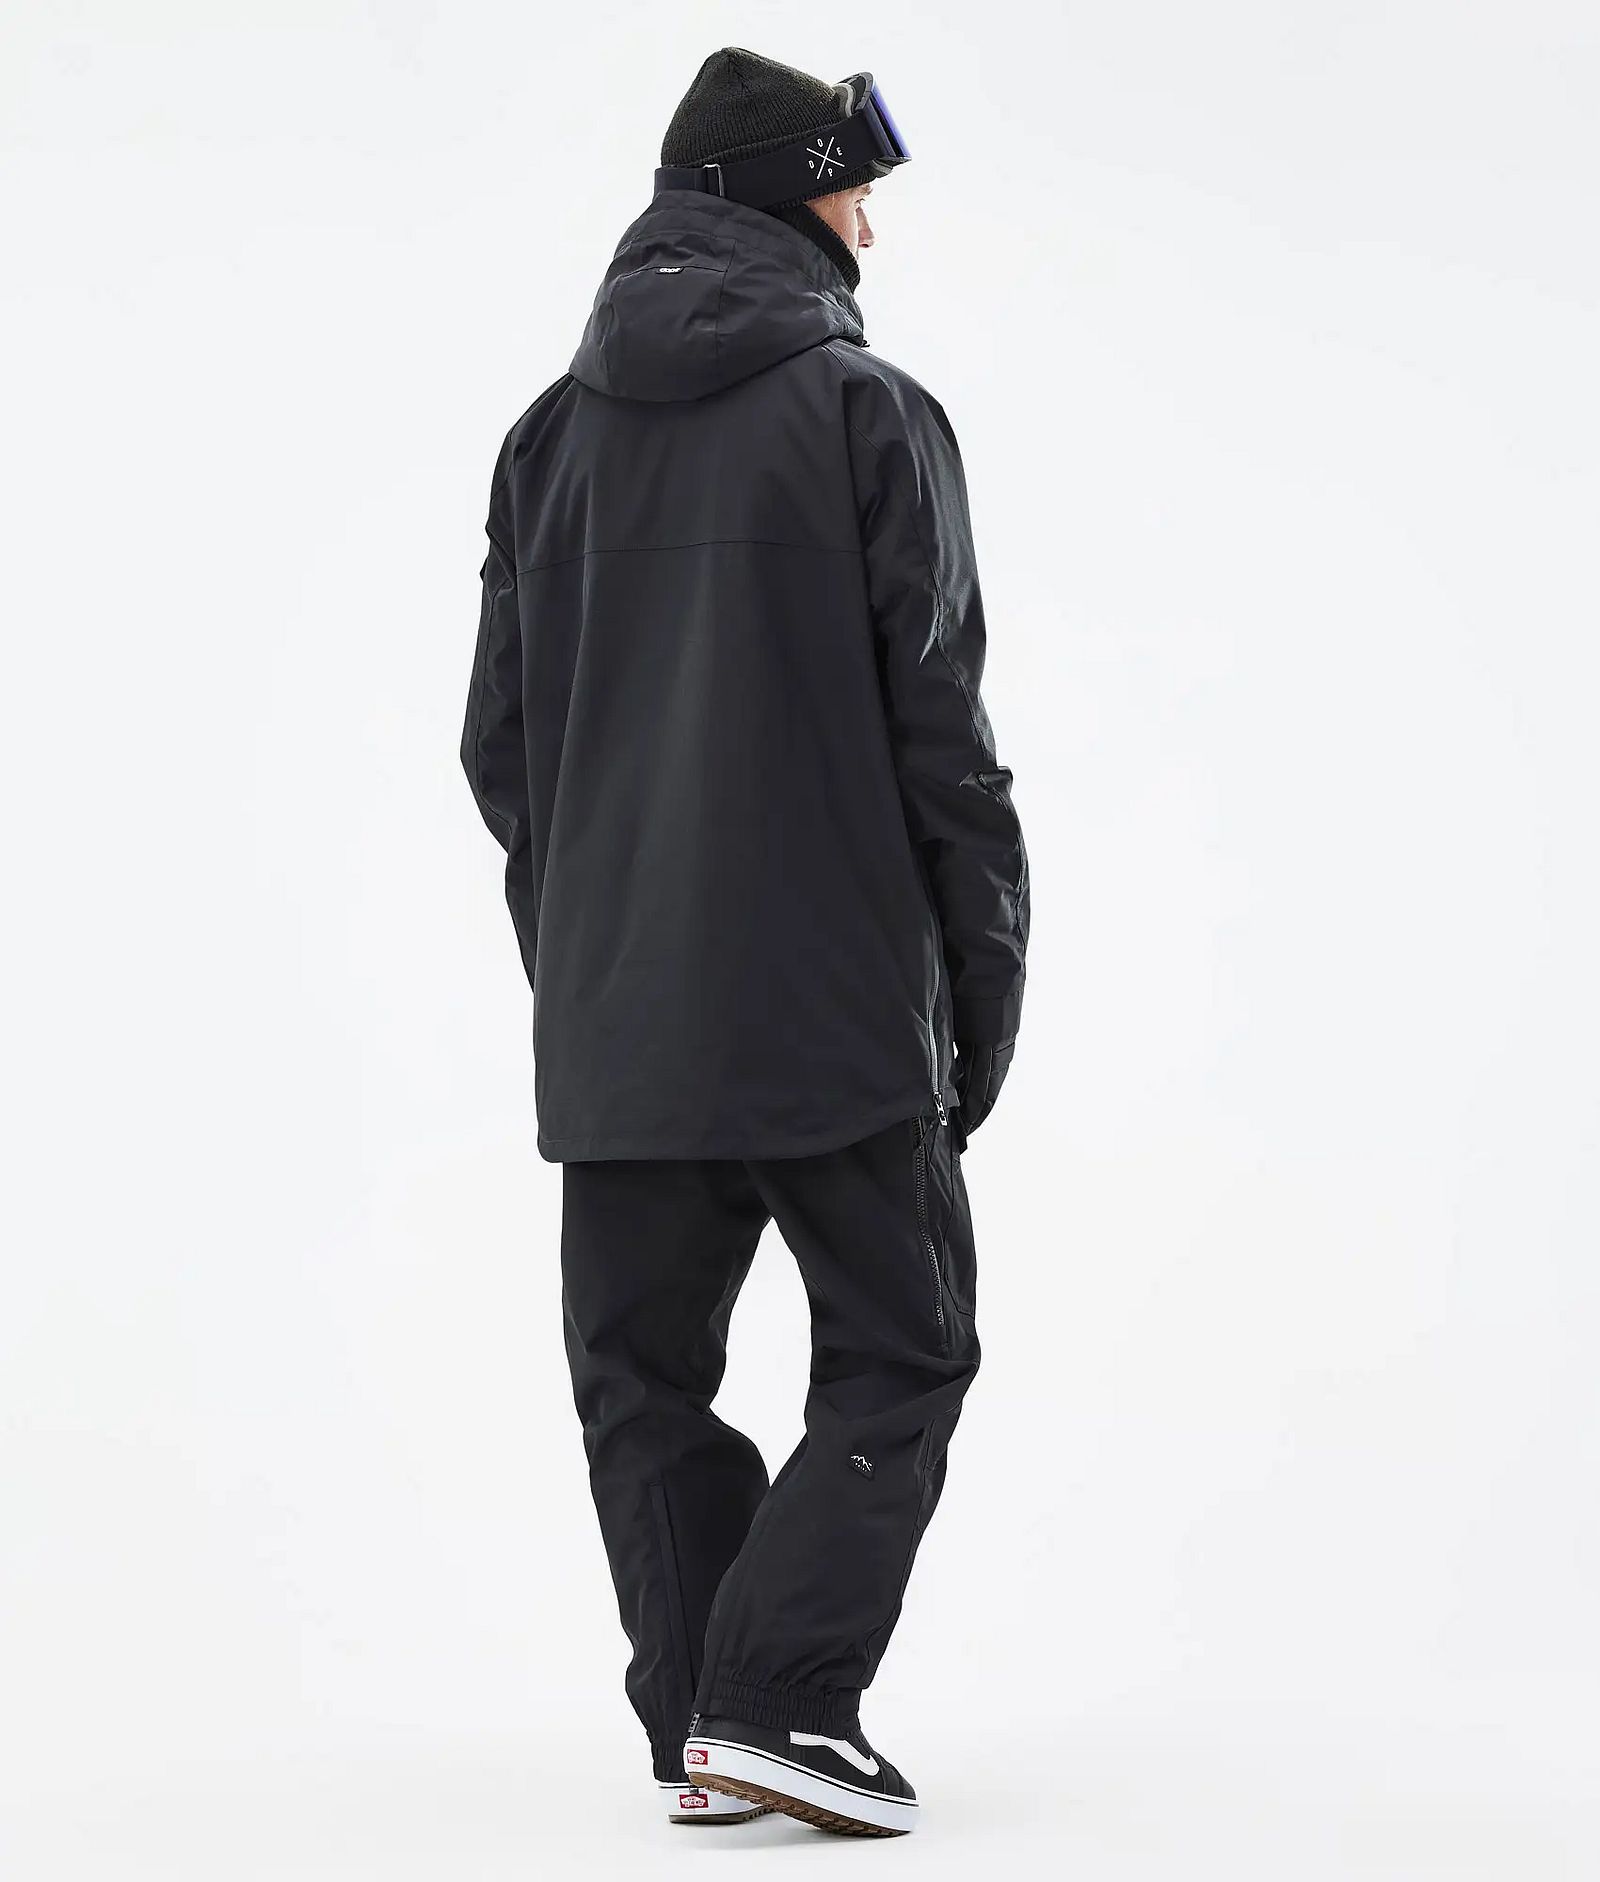 Akin Outfit de Snowboard Hombre Black